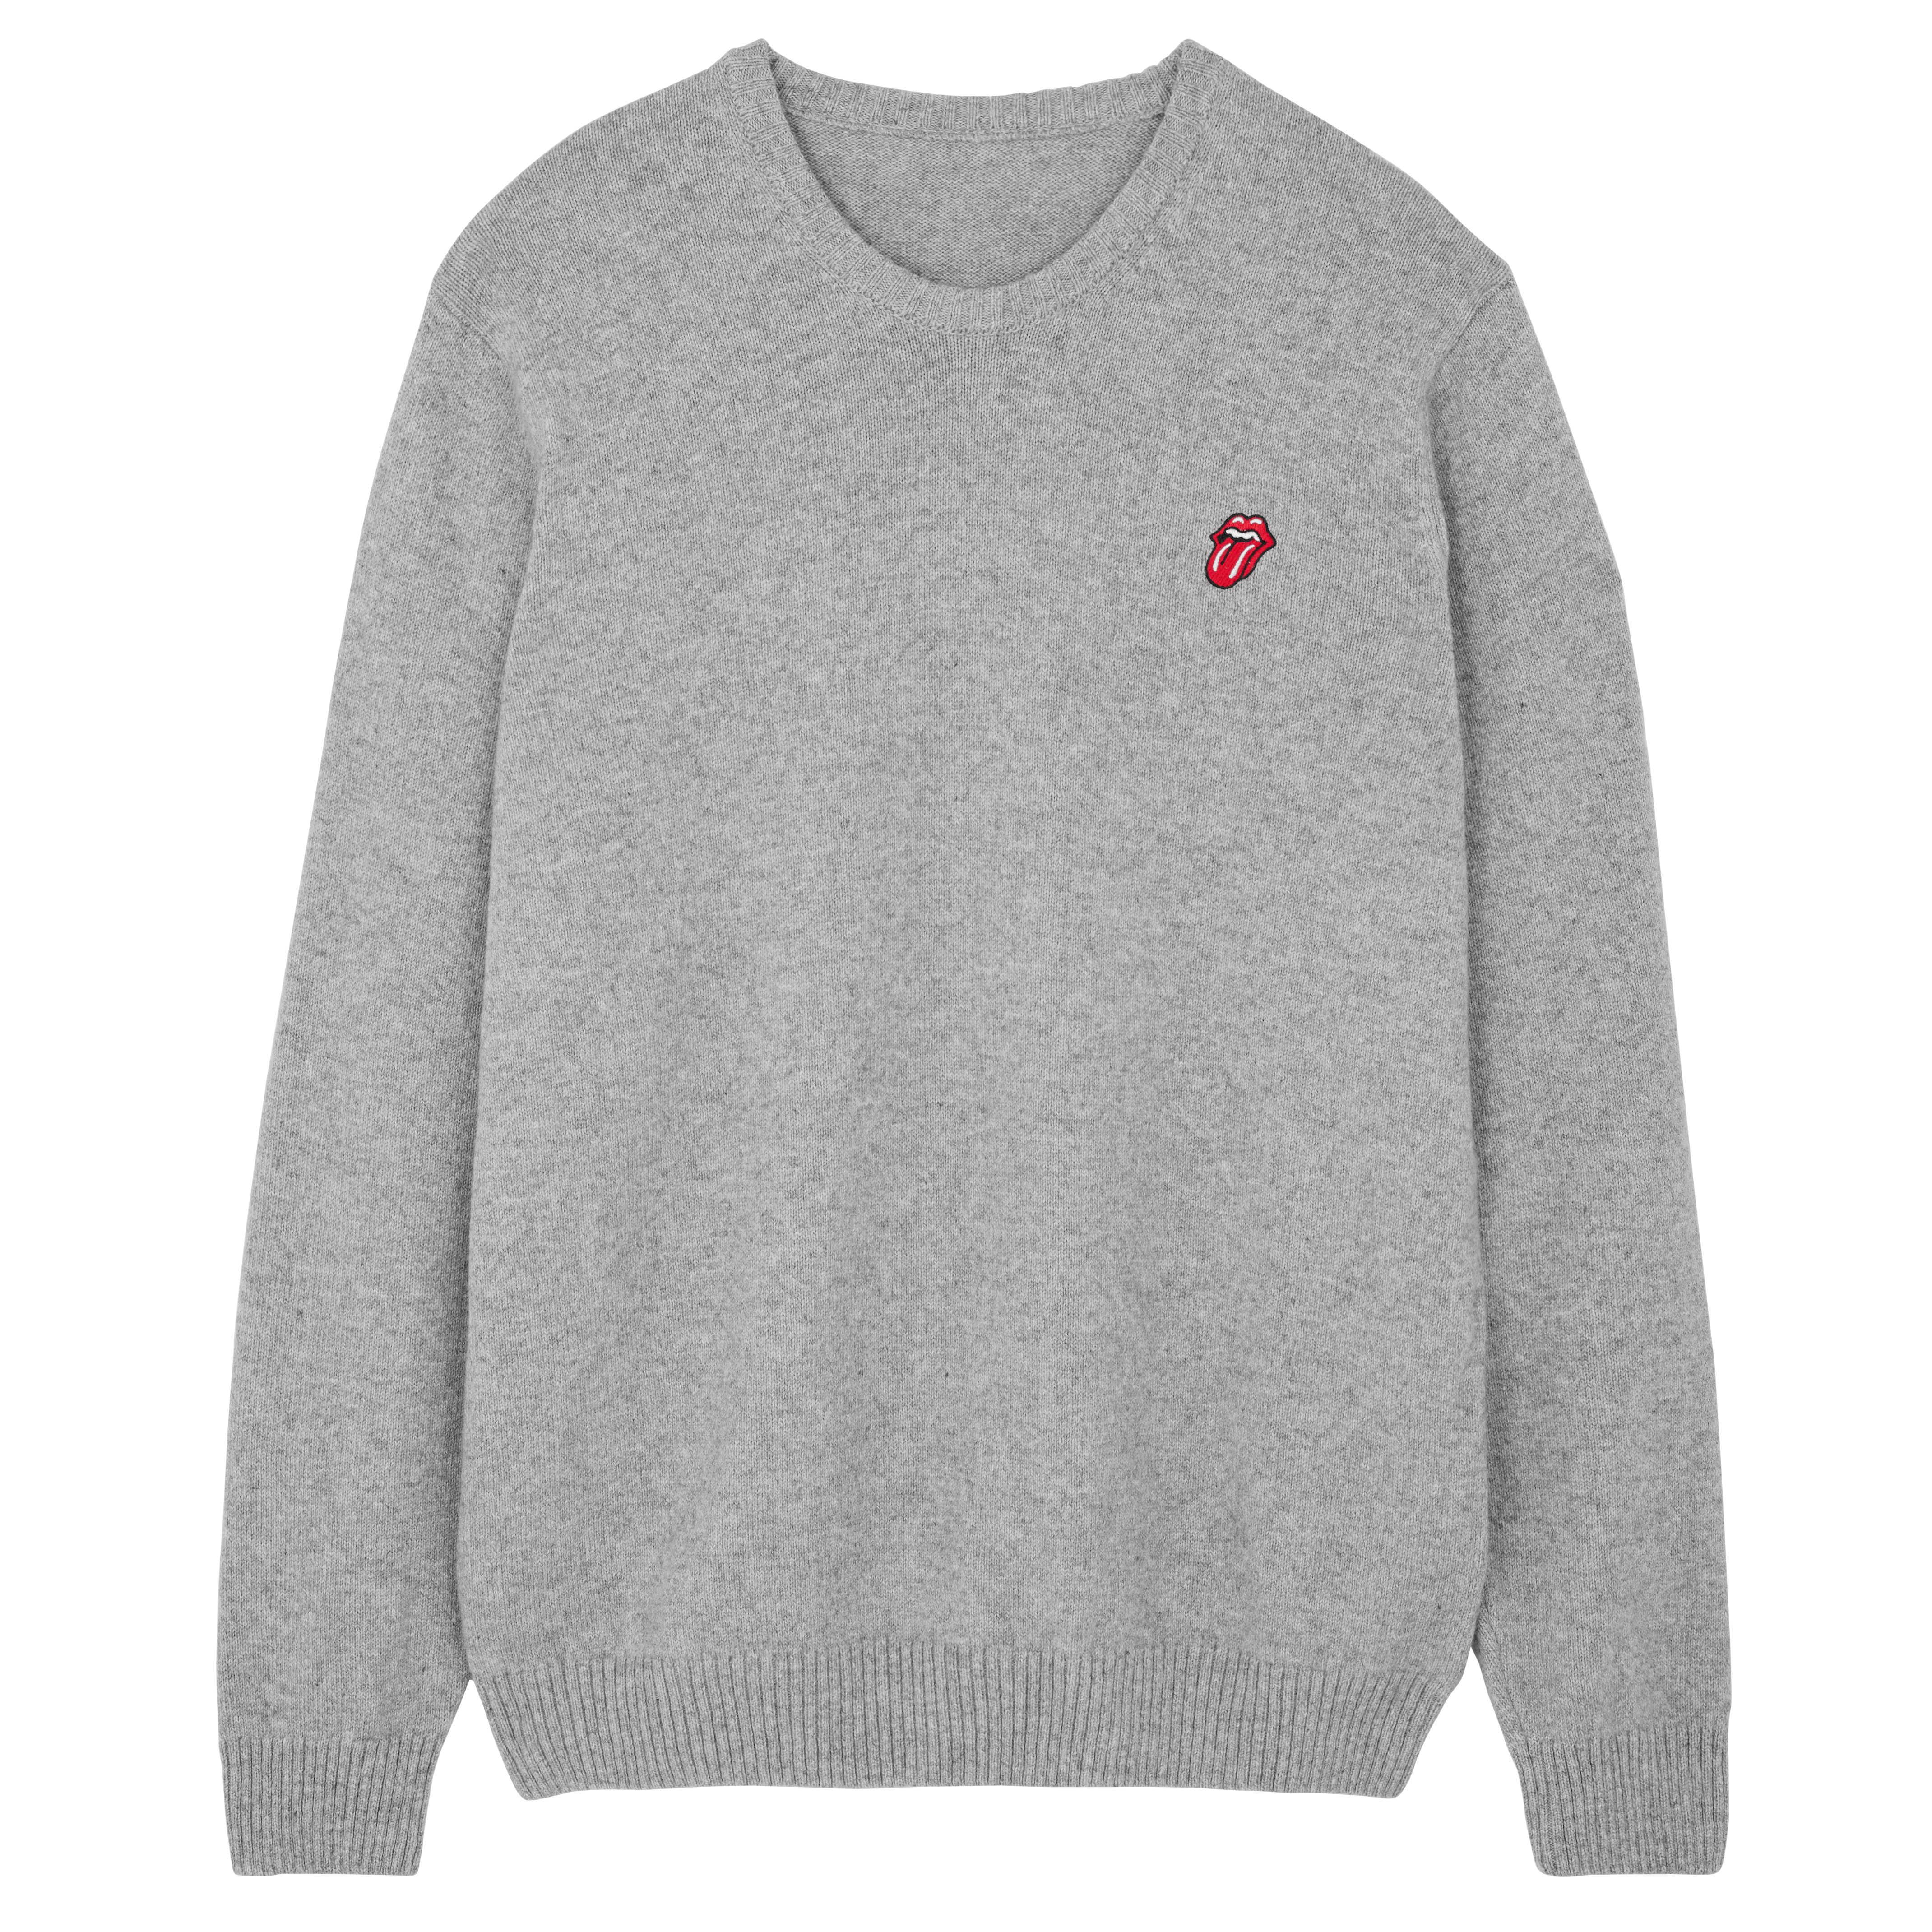 Carnaby - Spring/Summer Grey Merino Sweater